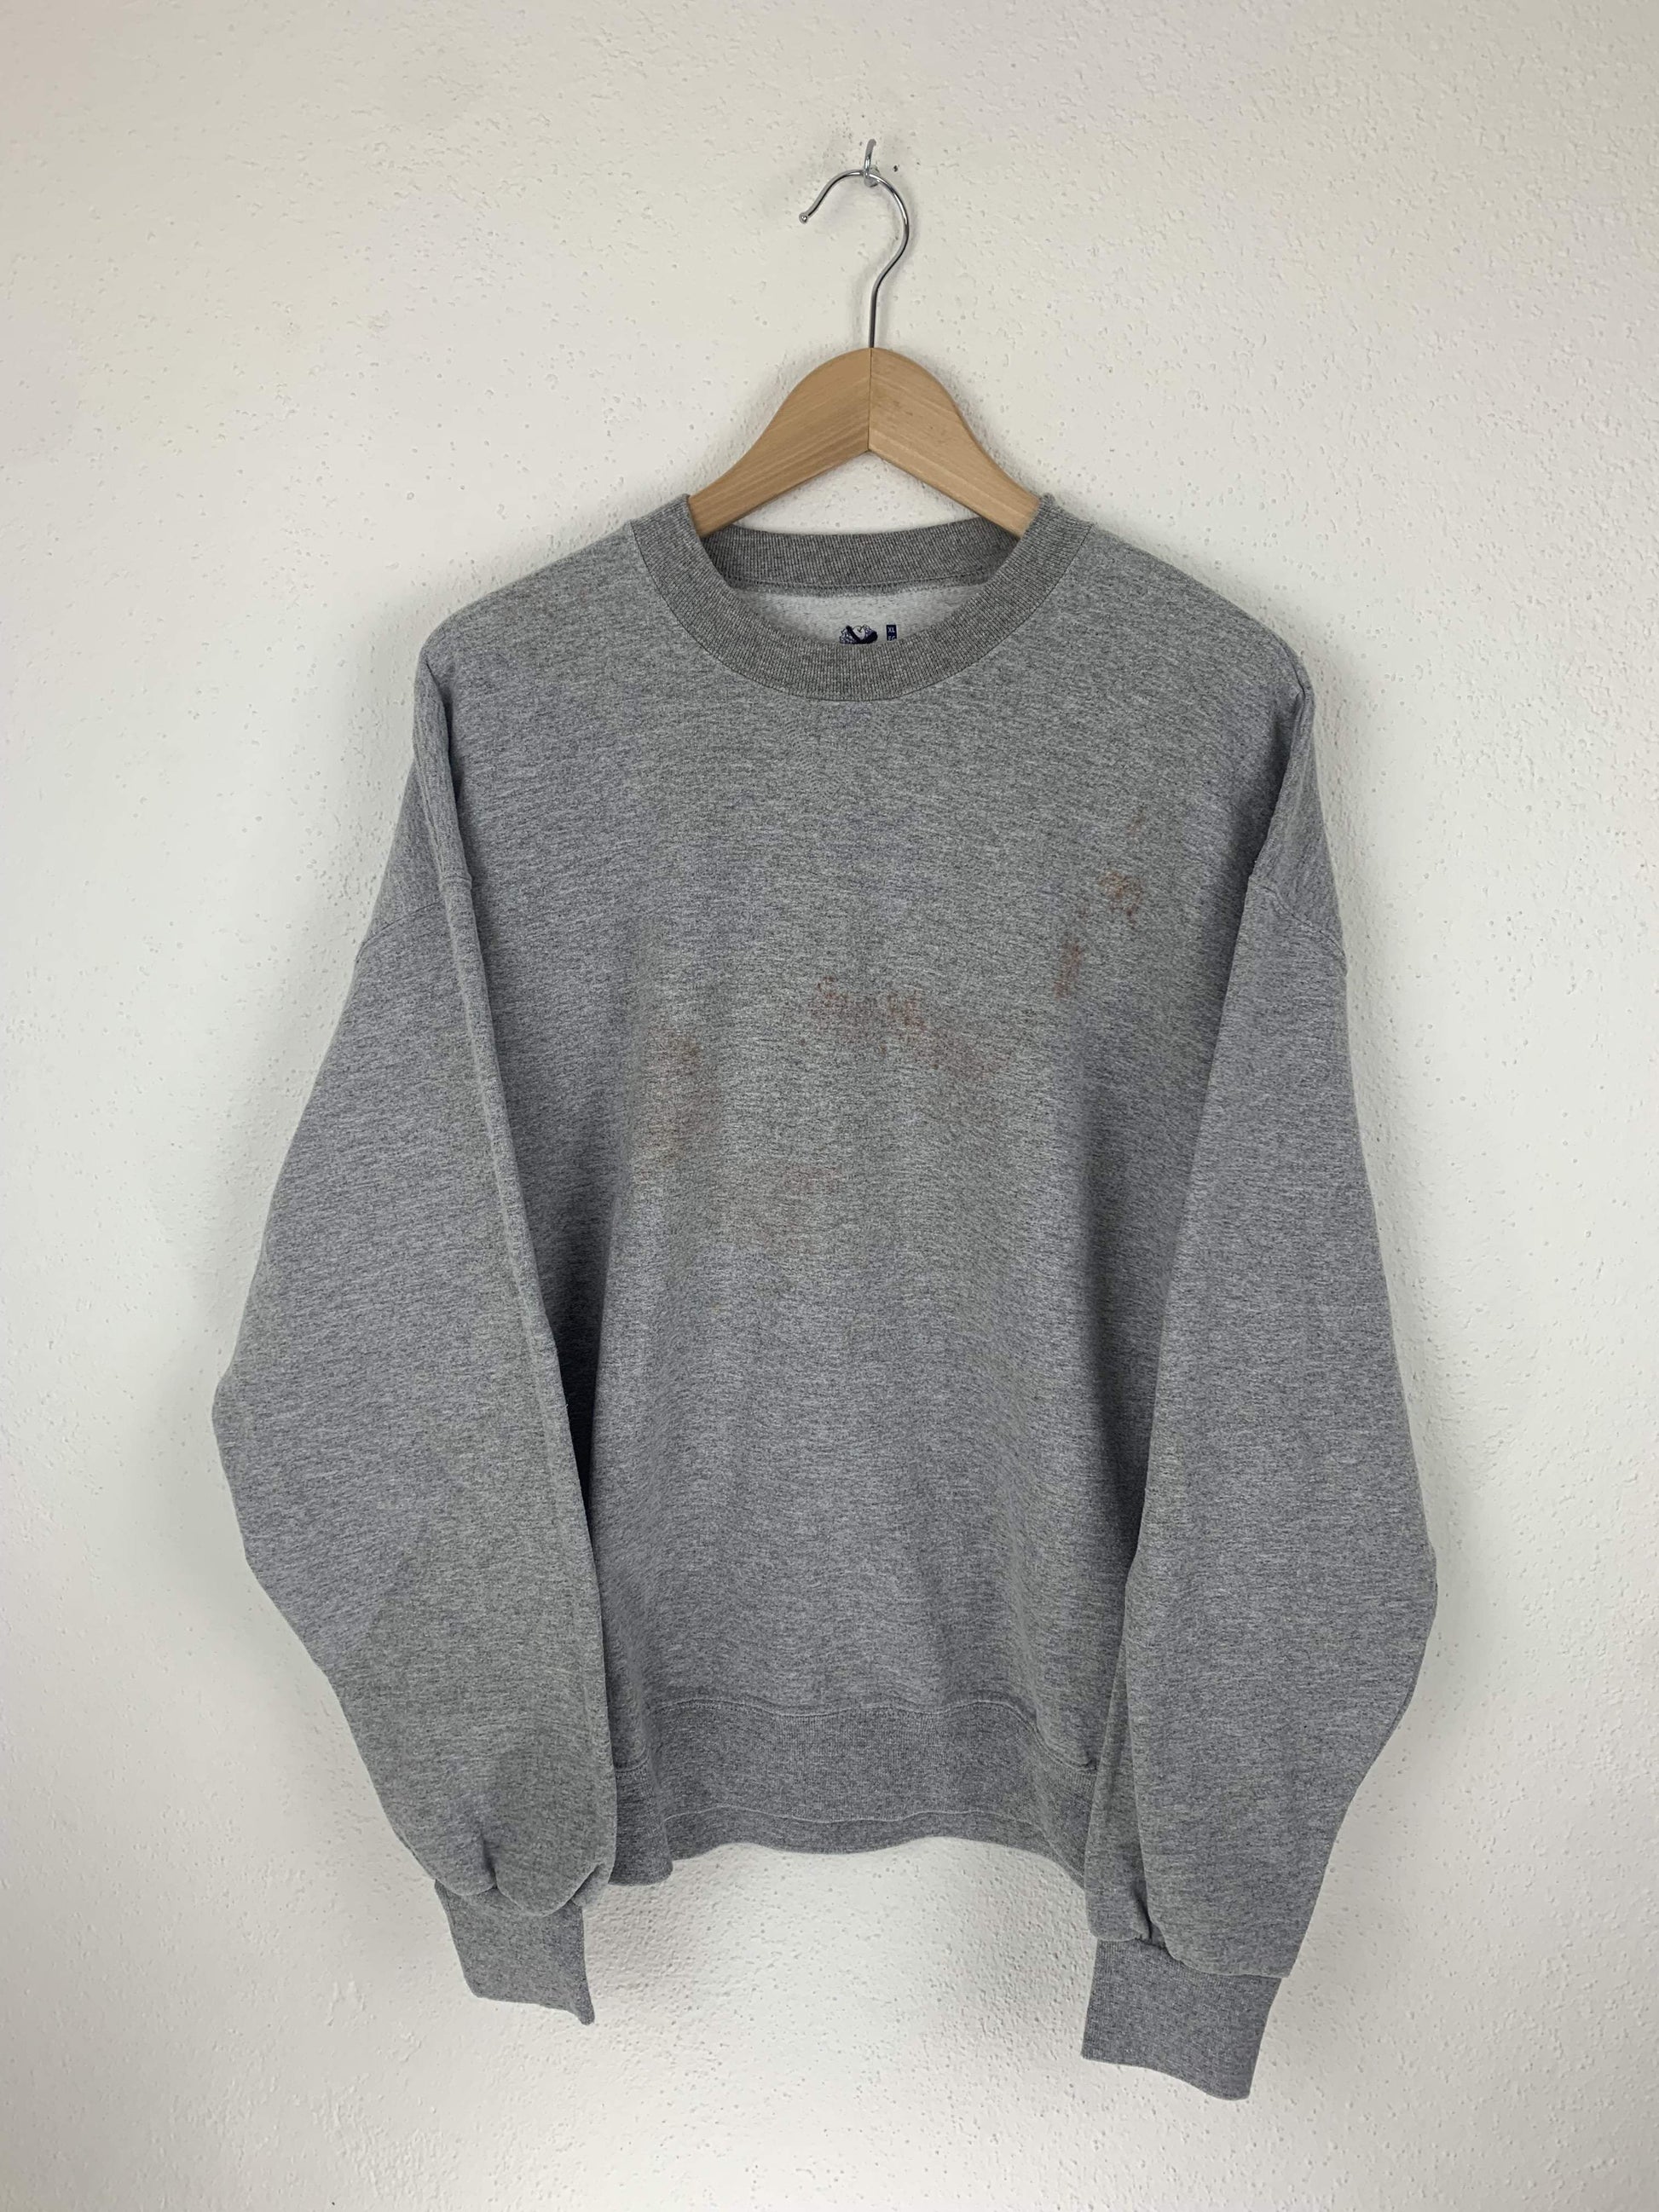 Vintage Basic Sweater - XL.